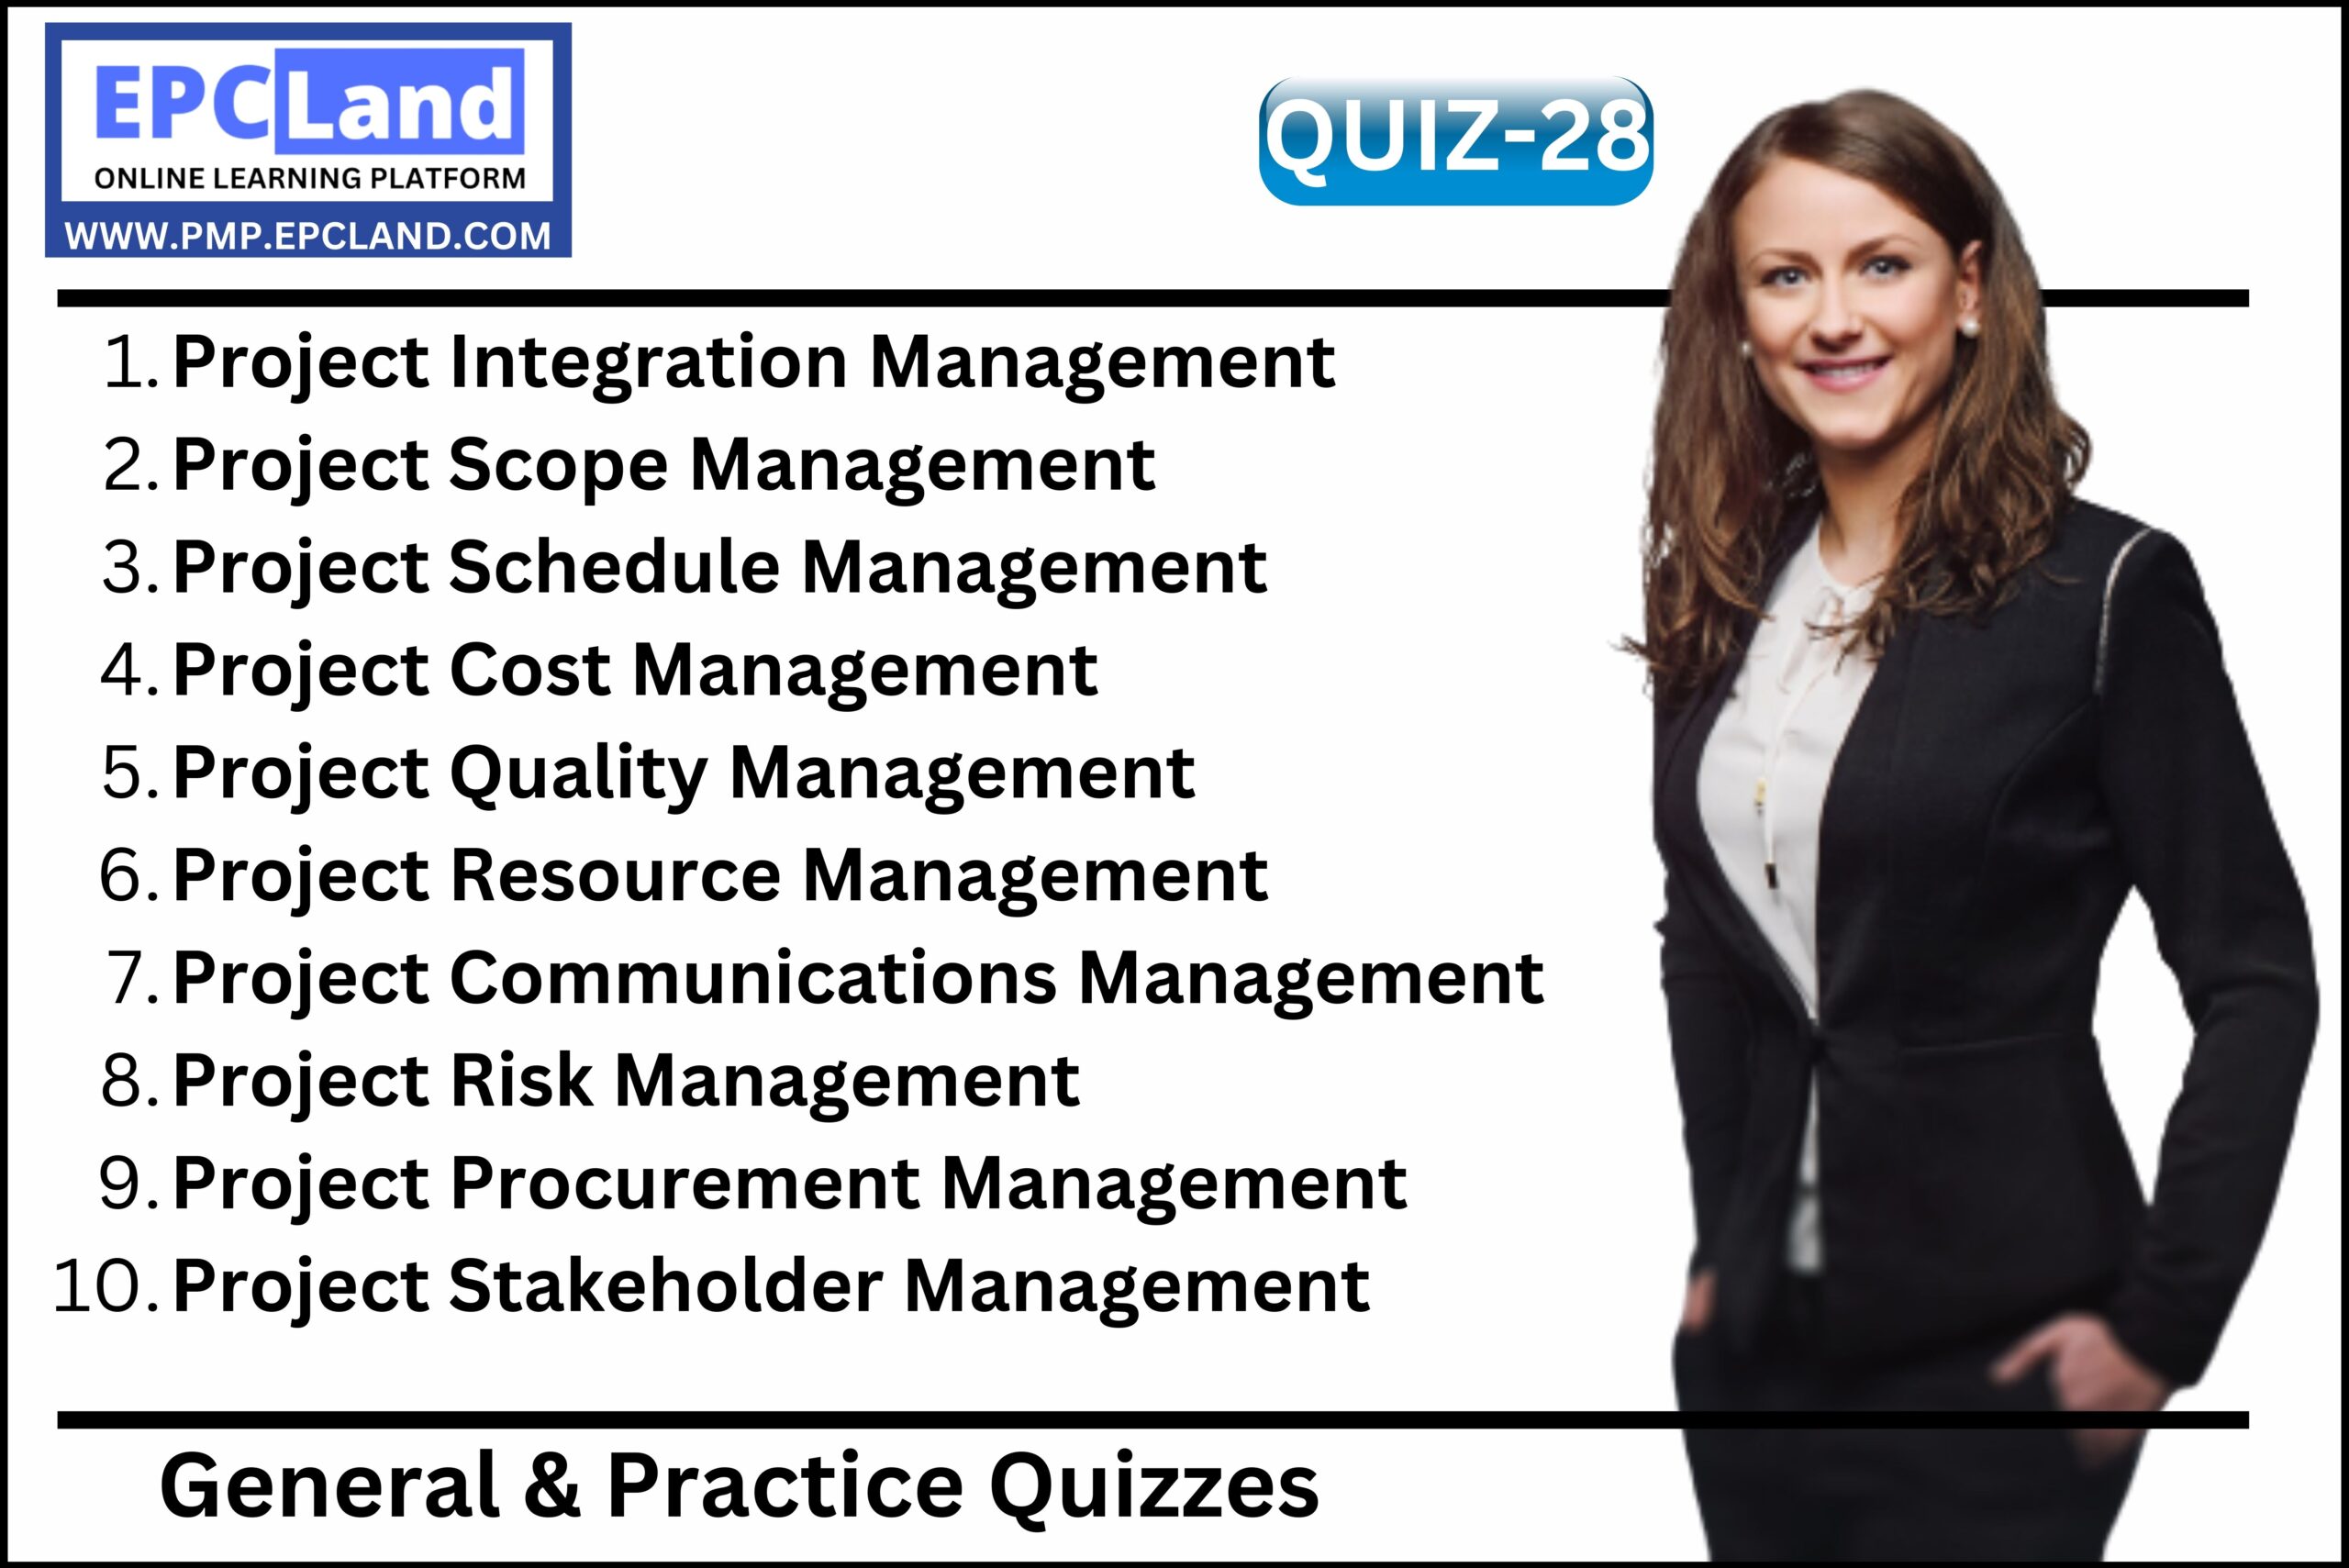 Practice PMP Questions: Quiz-28